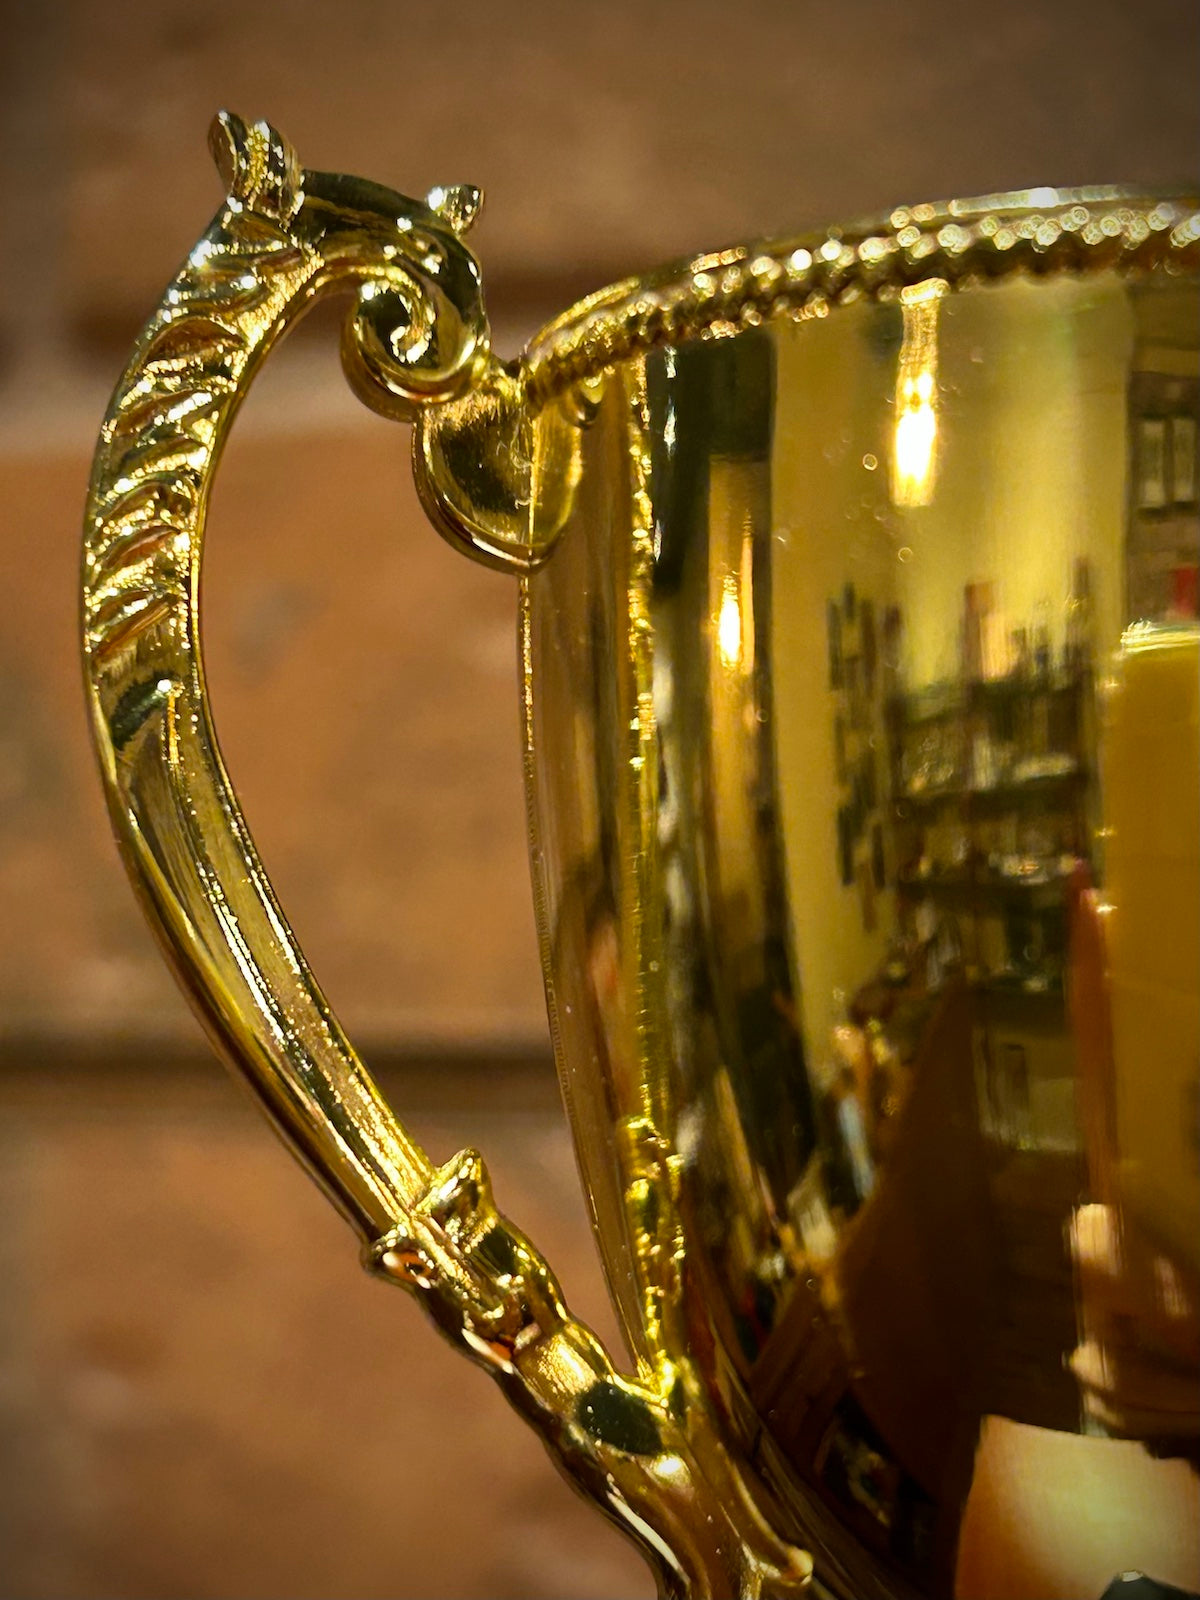 Gold Metal Trophy Cup on Black Base